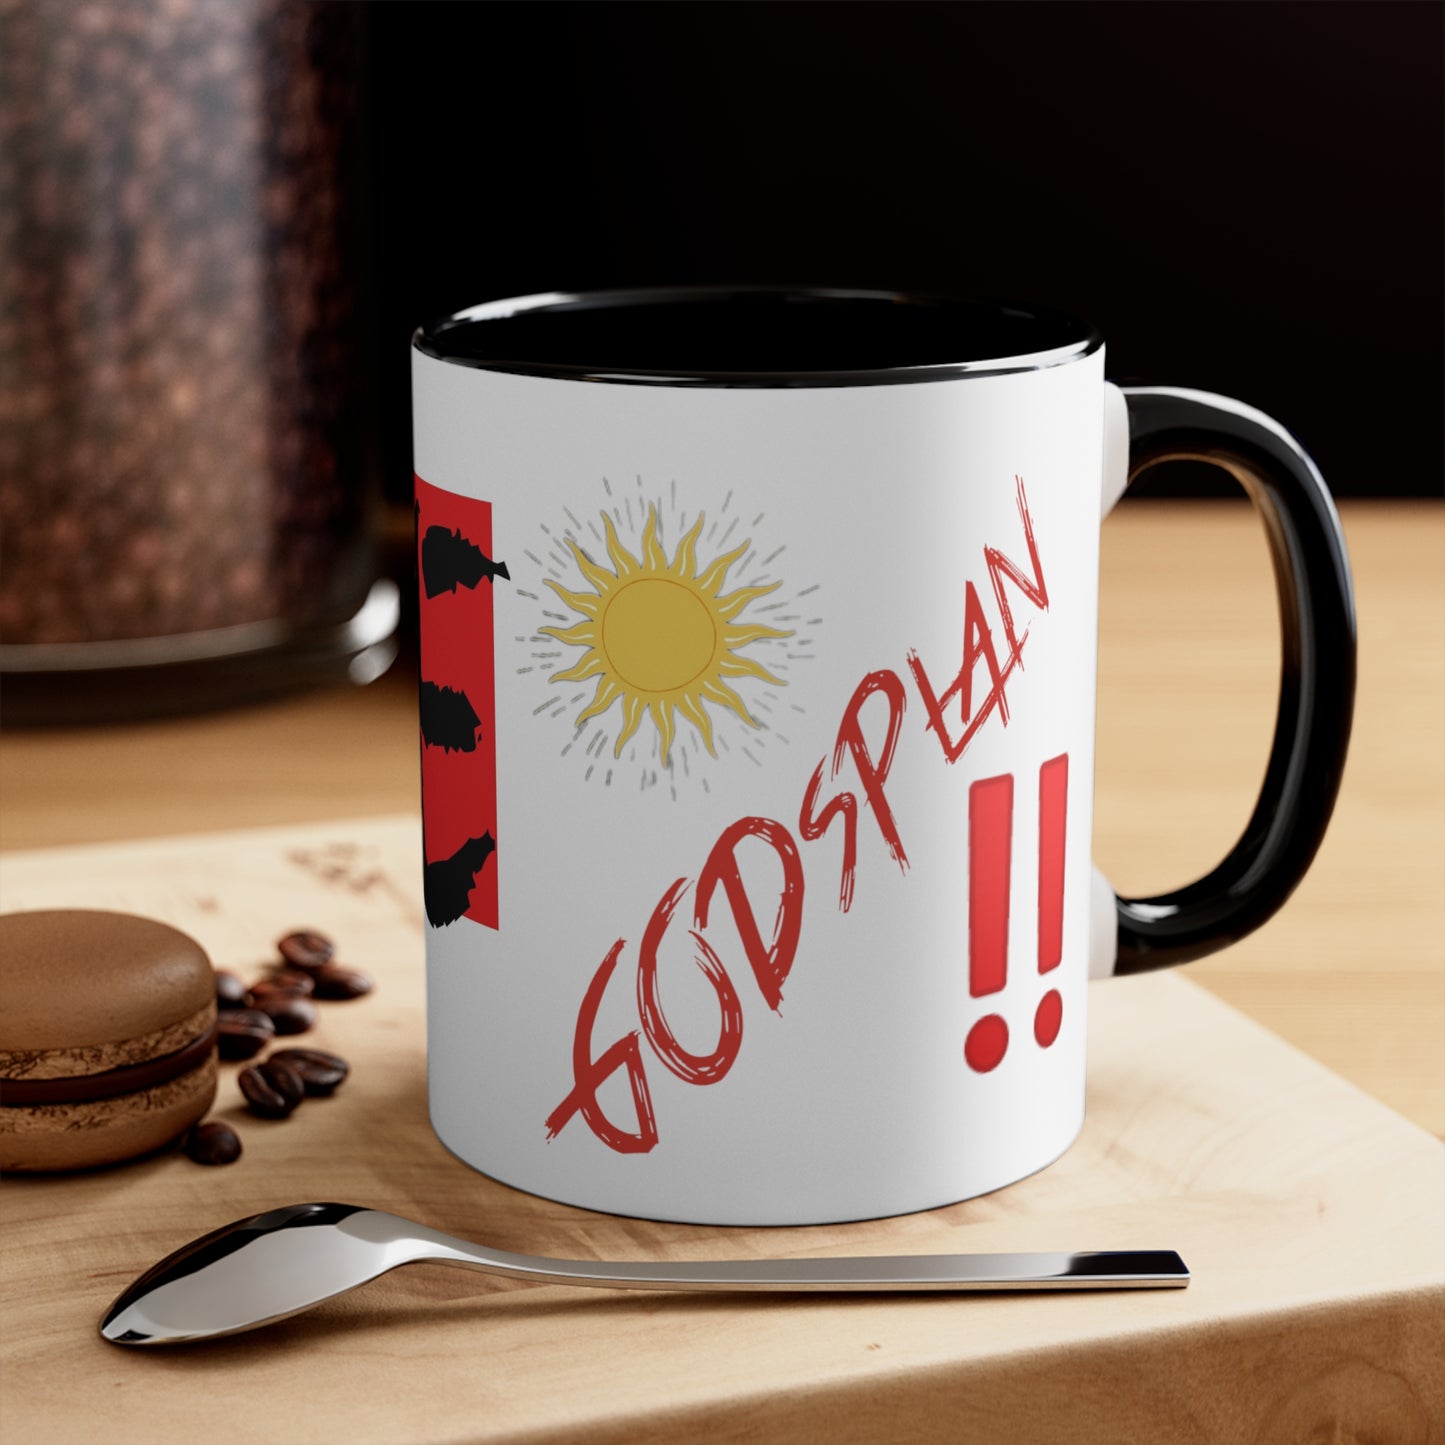 "Good Morning" -Sean Breed- L❤️VE coffee Mug, 11oz